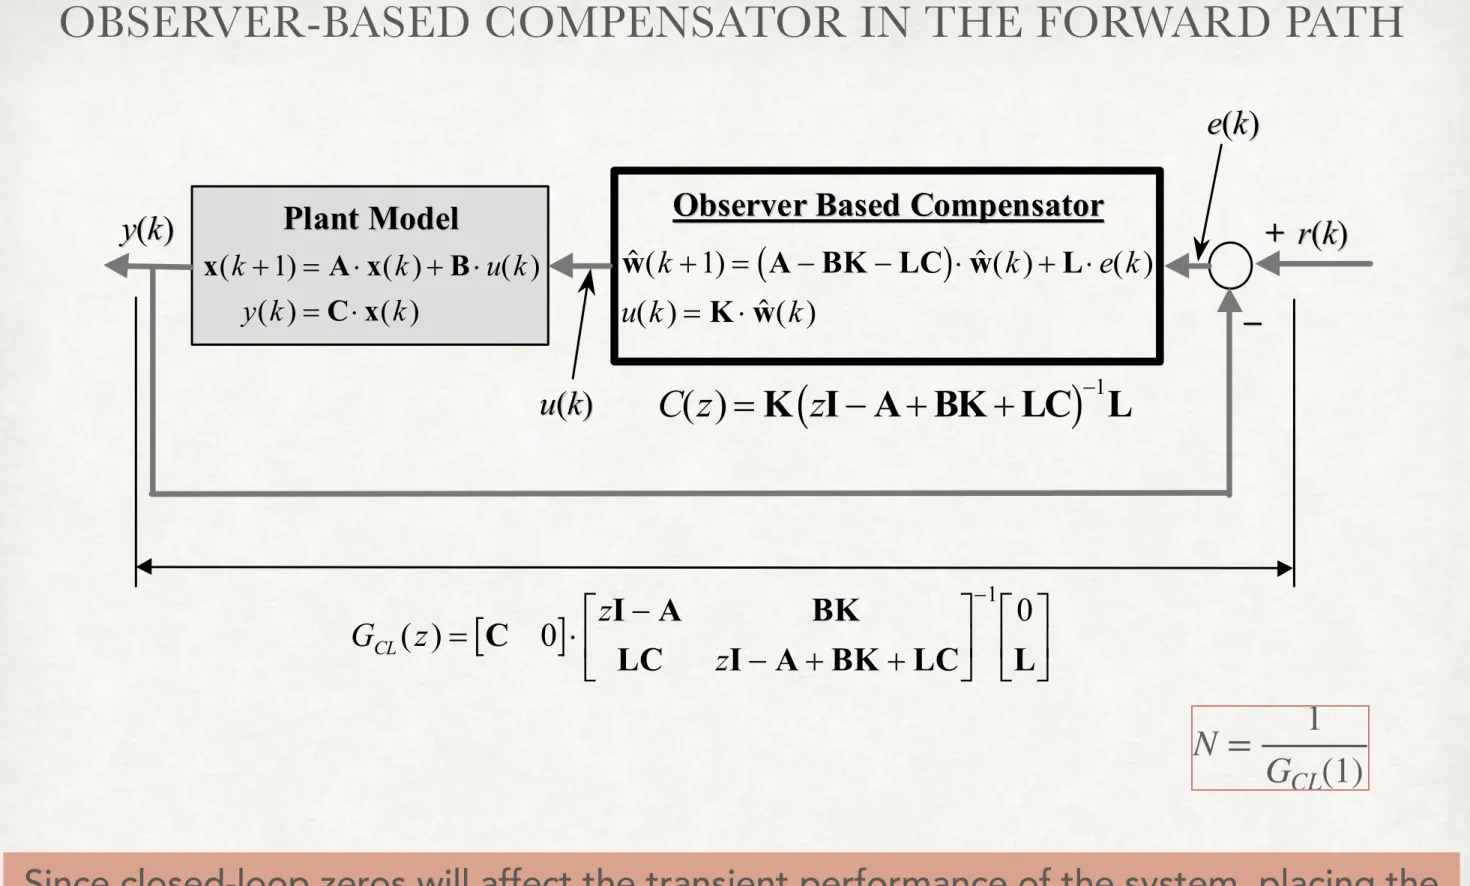 Figure 8.6 Observer-Based Compensator in the Forward Path  P P r r e e d d i i c c t t i i o o n n O O b b s s e e r r v v e e r r - - B B a a s s e e d d C C o o m m p p e e n n s s a a t t o o r r